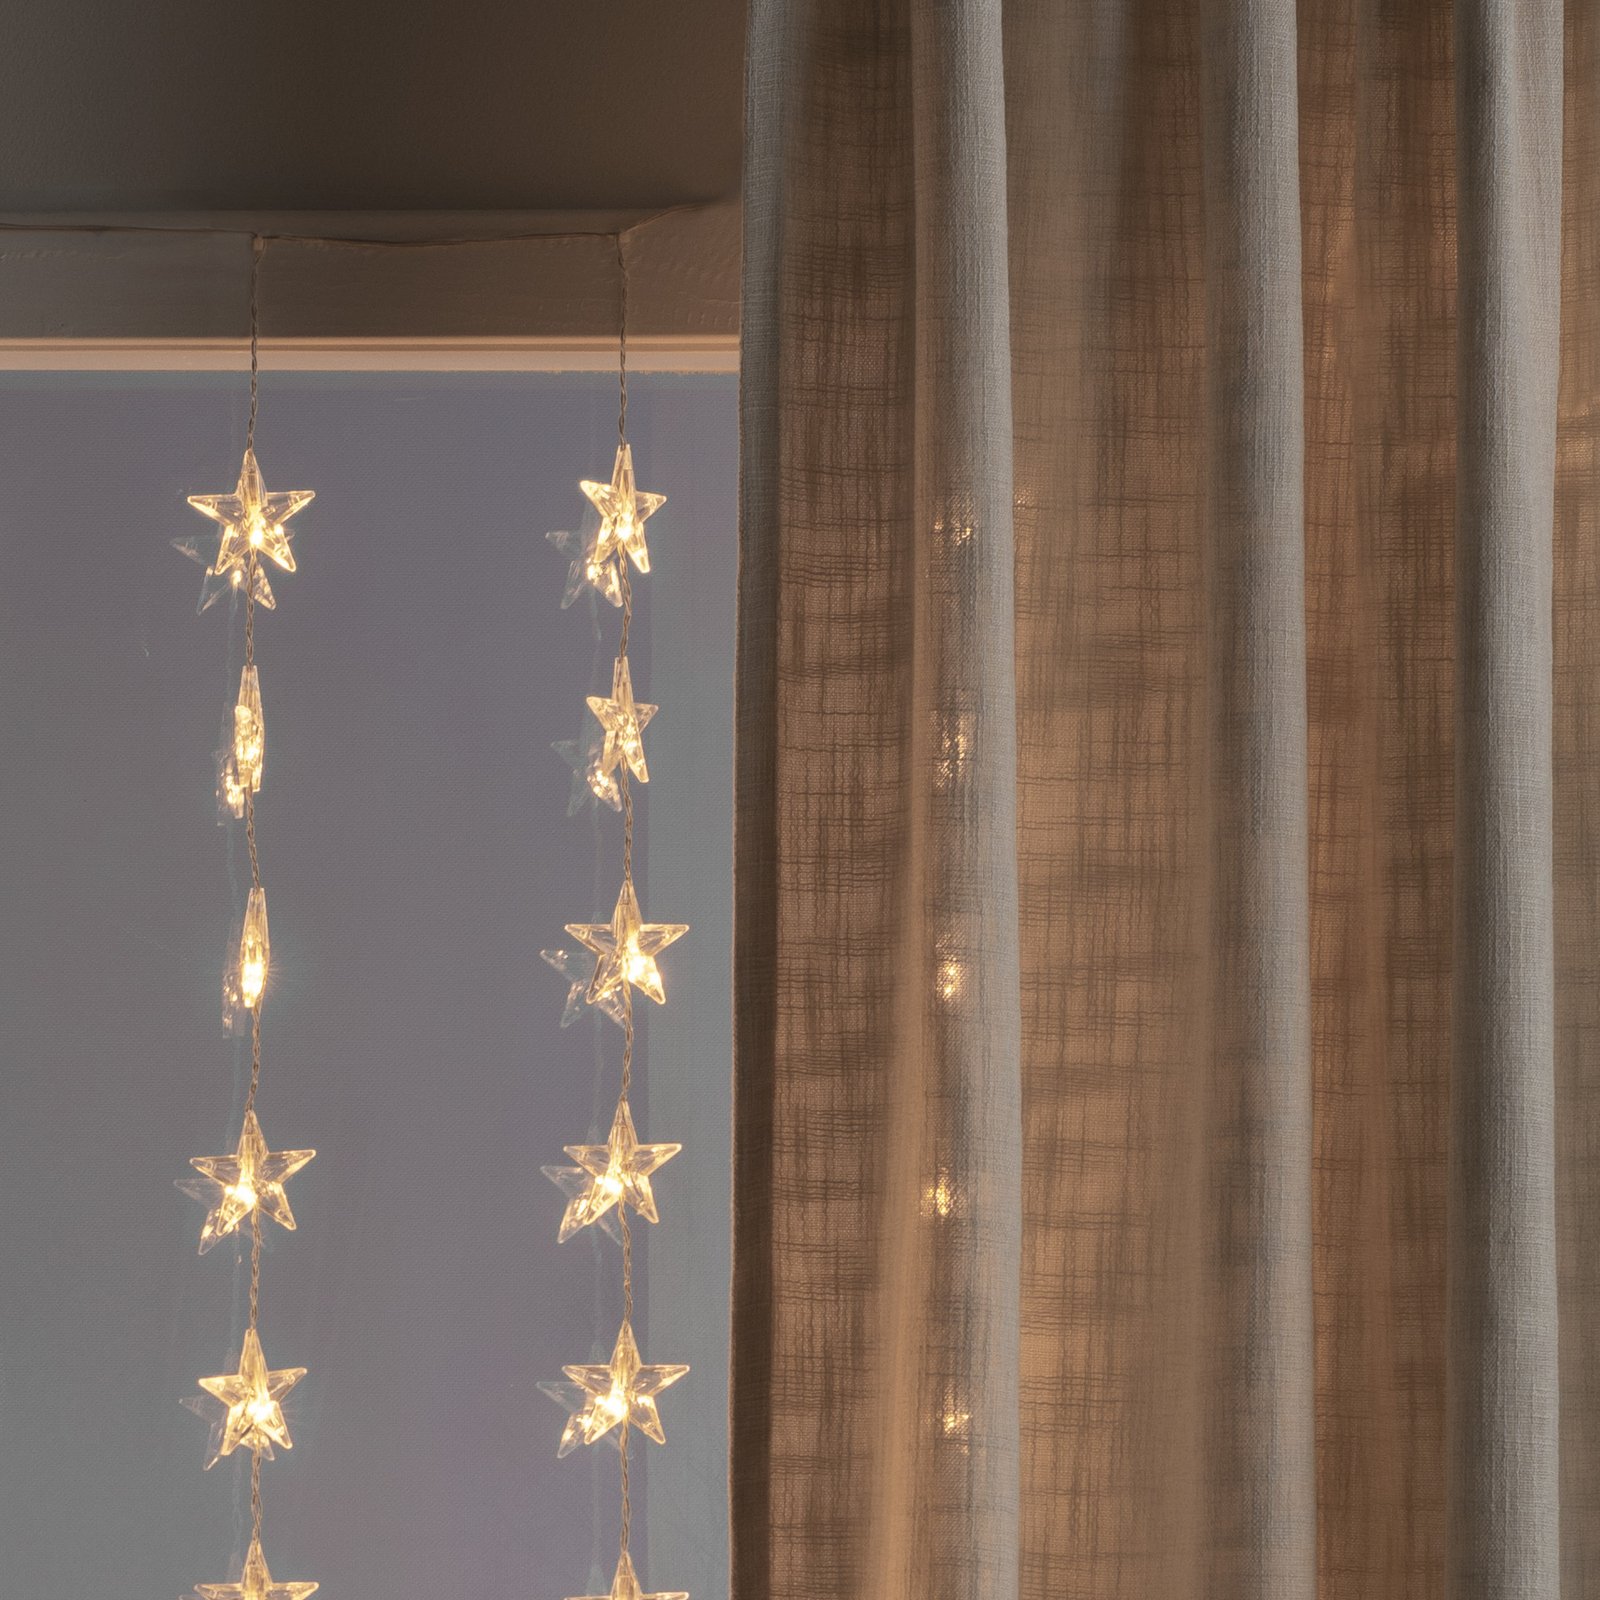 LED curtain light stars 120-bulb, warm white